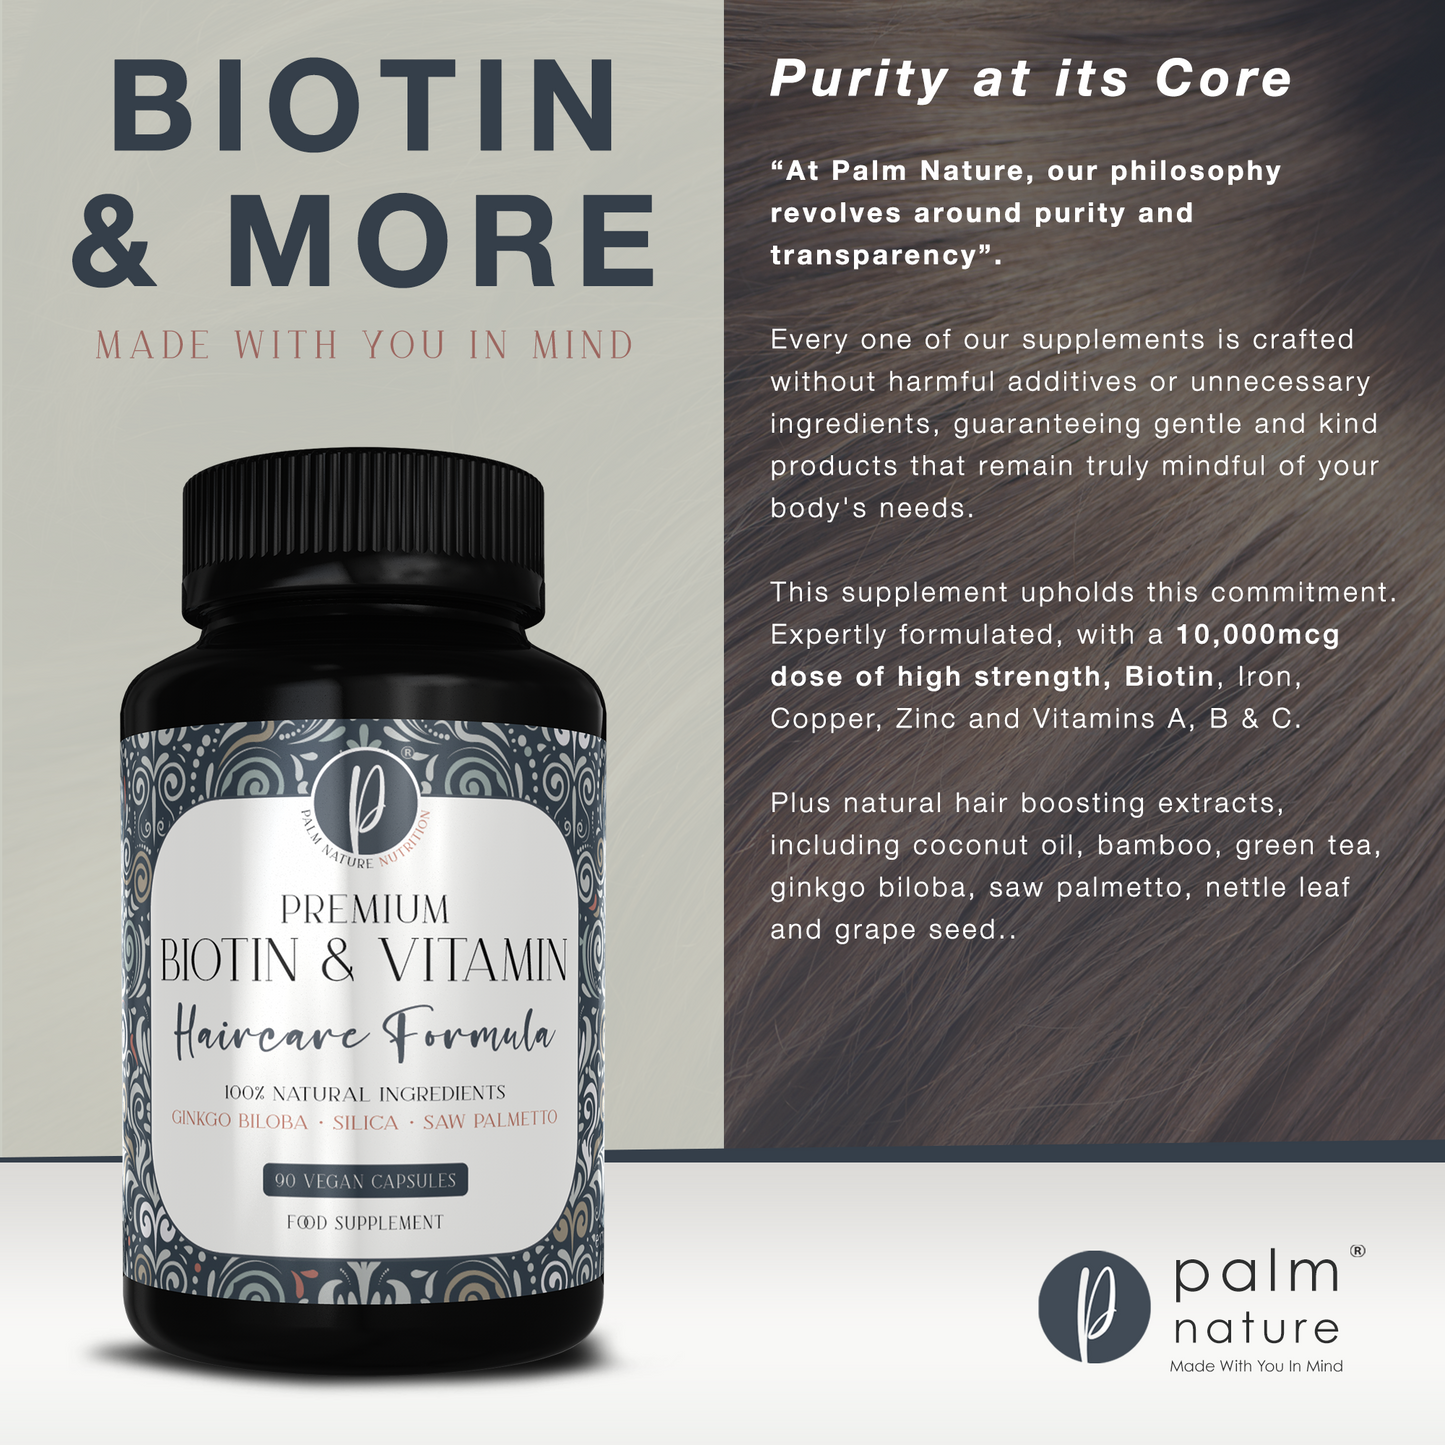 Premium Biotin & Vitamin Haircare Formula